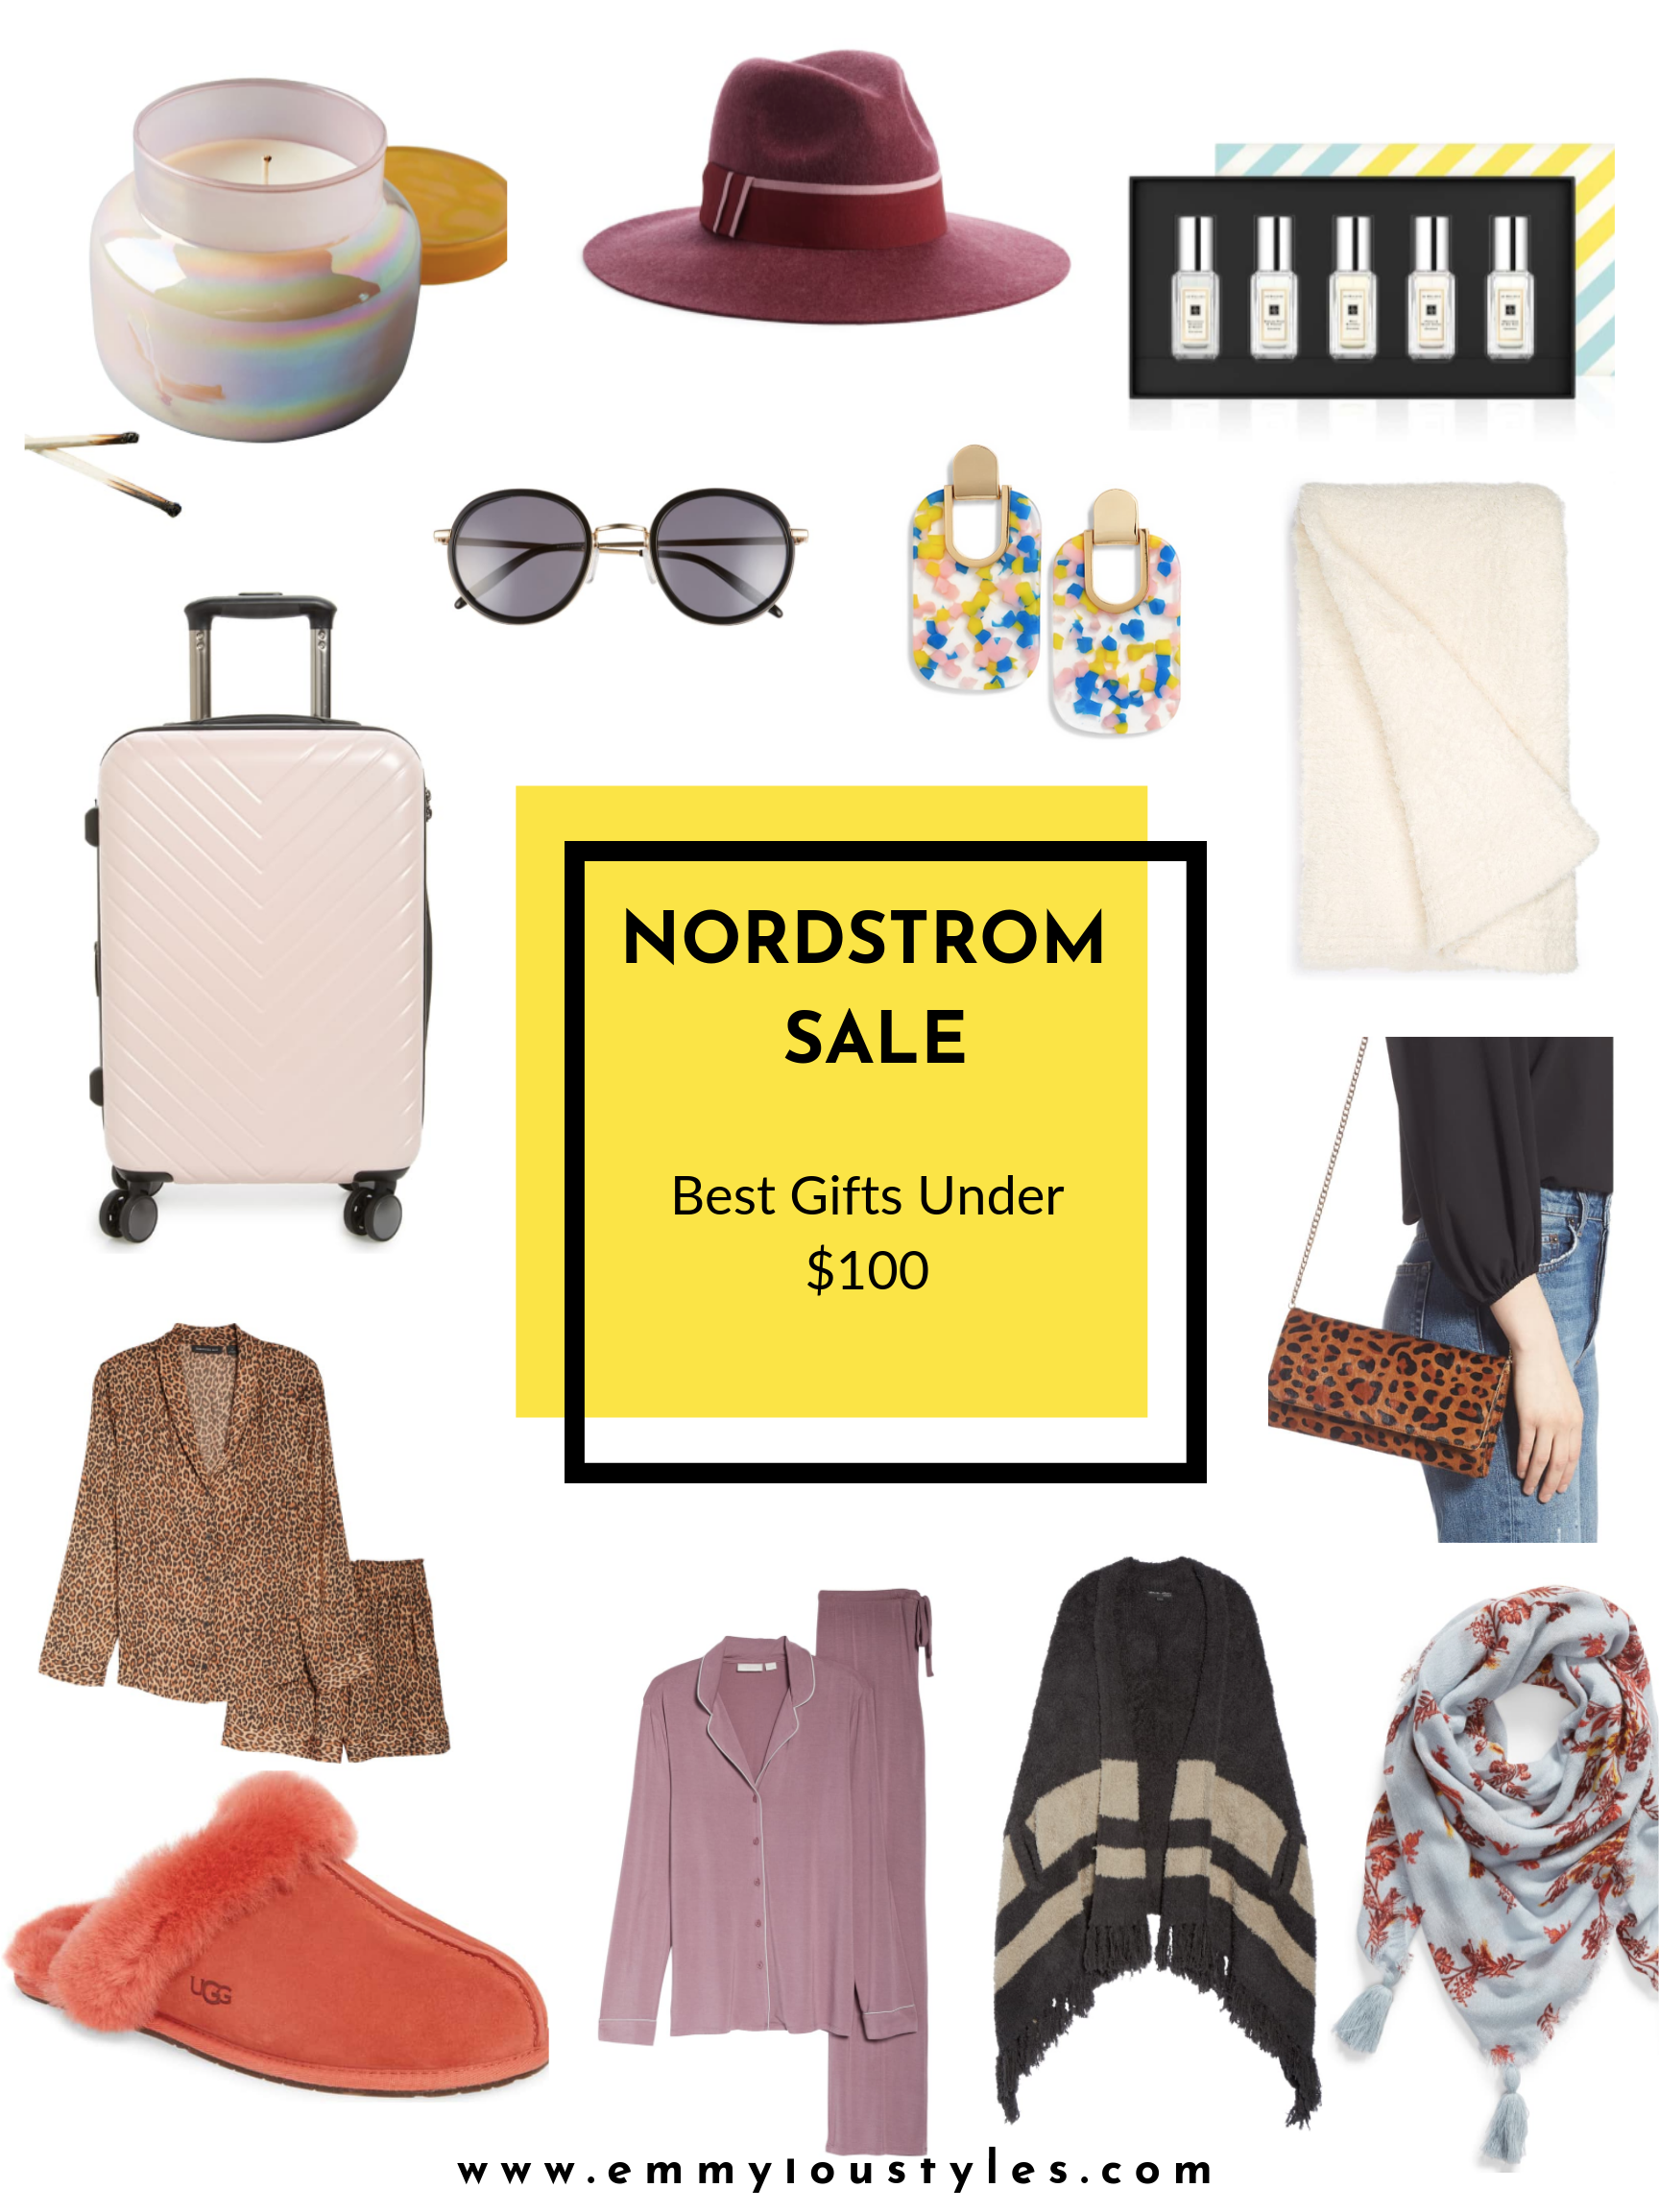 Nordstrom Gift Guide Under $100